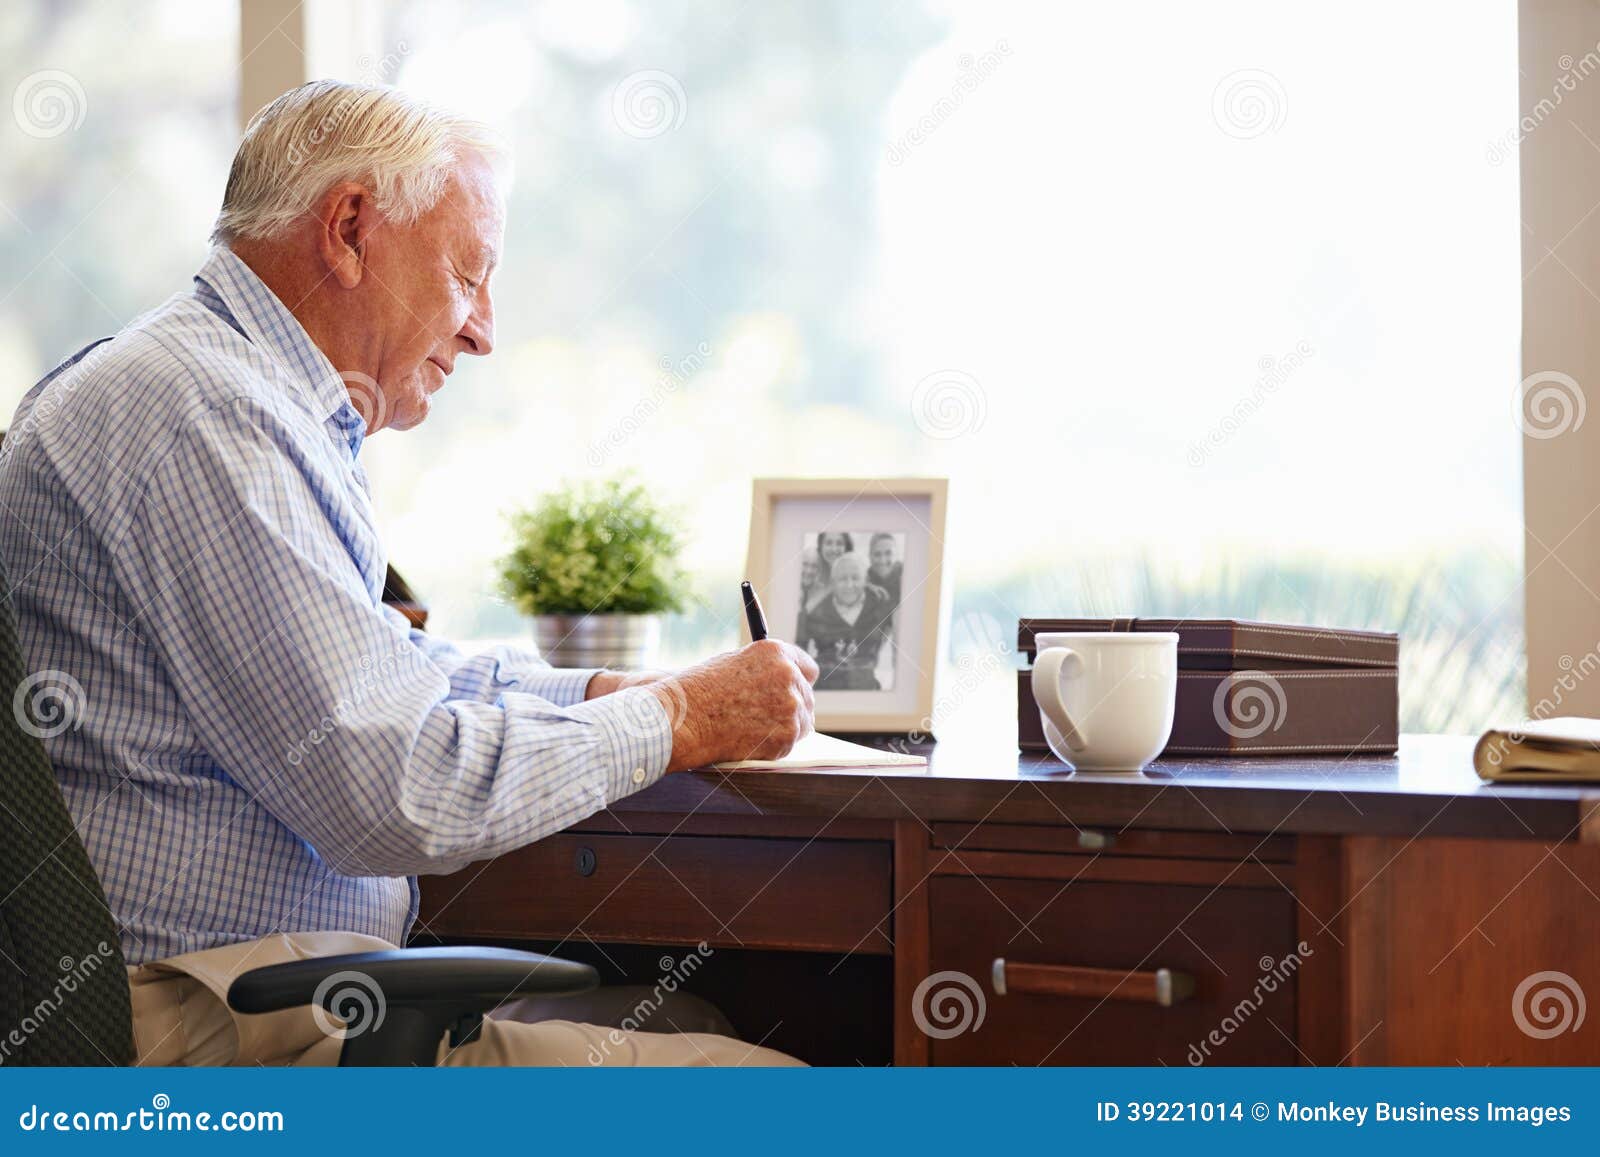 senior man writing memoirs in book sitting at desk